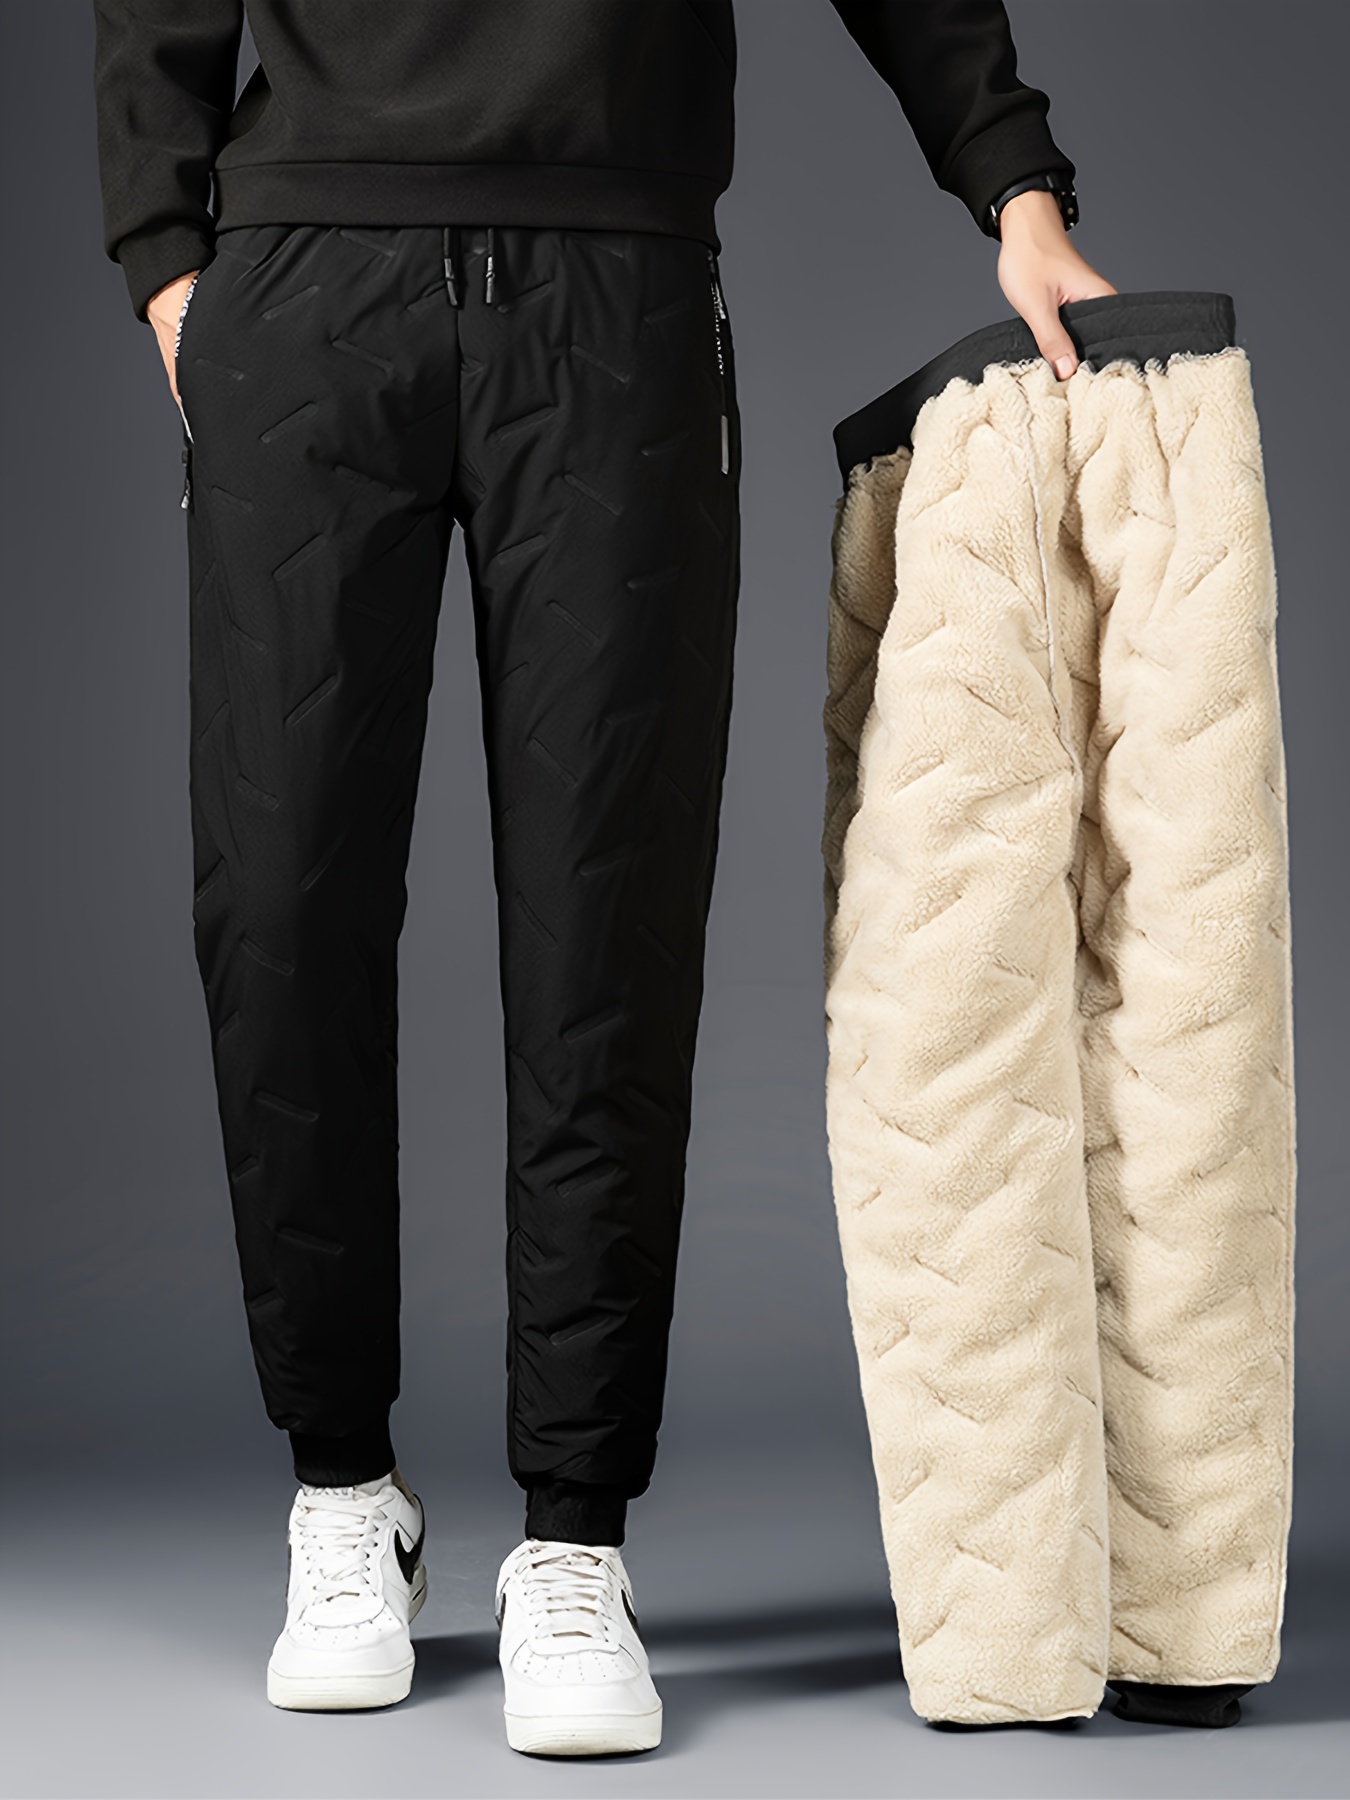 Men's Warm winter thick Thermal jeans fleece lined Denim Pants cotton  Trousers